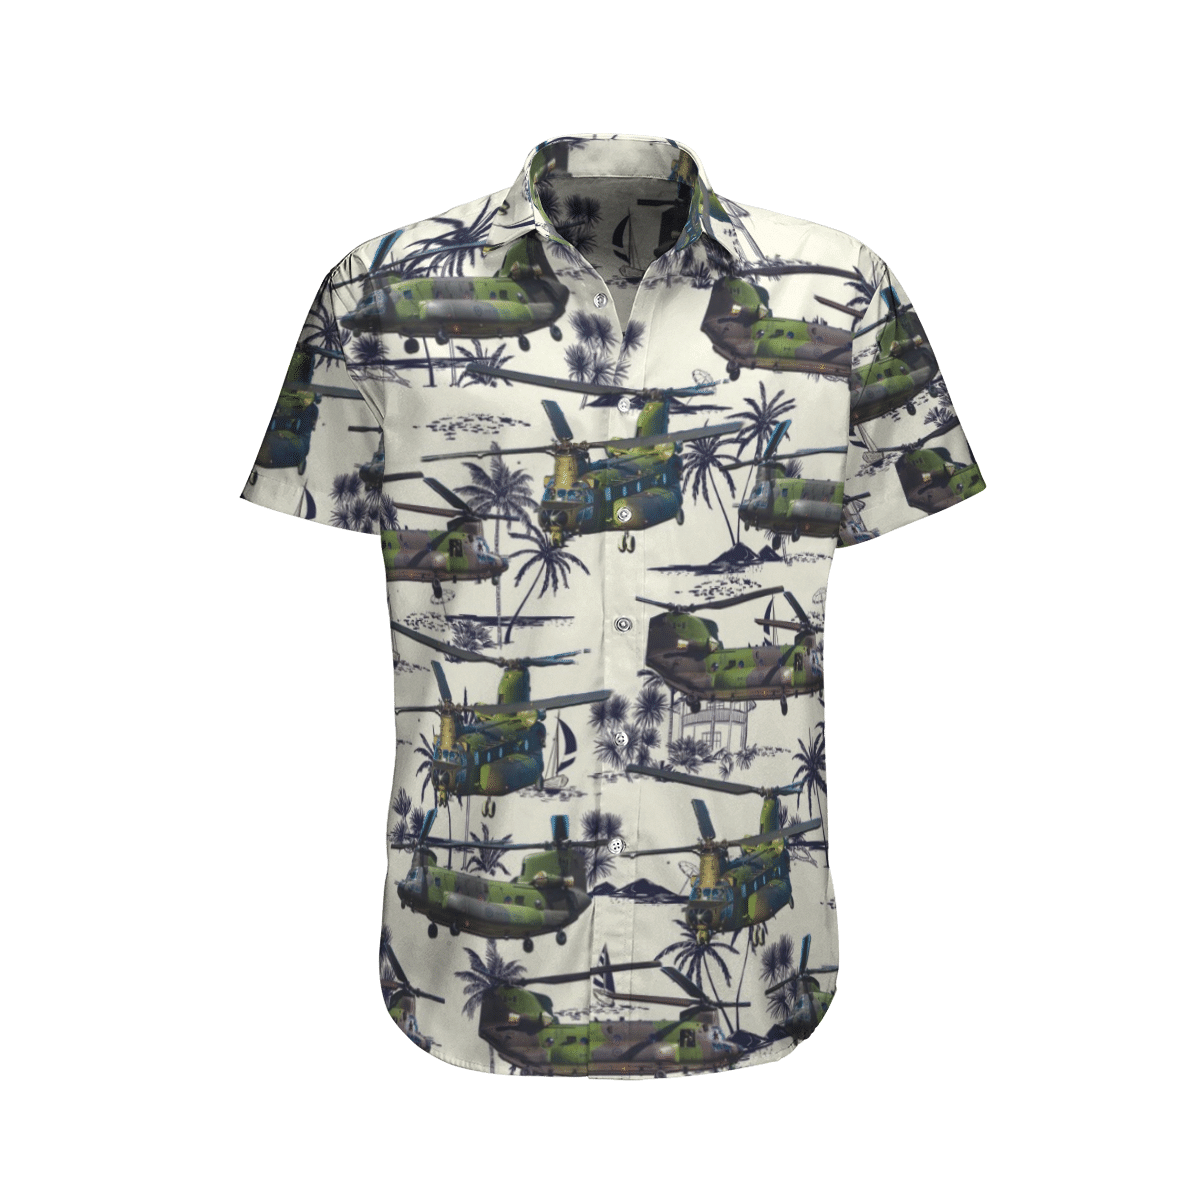 Get a new Hawaiian shirt to enjoy summer vacation 138